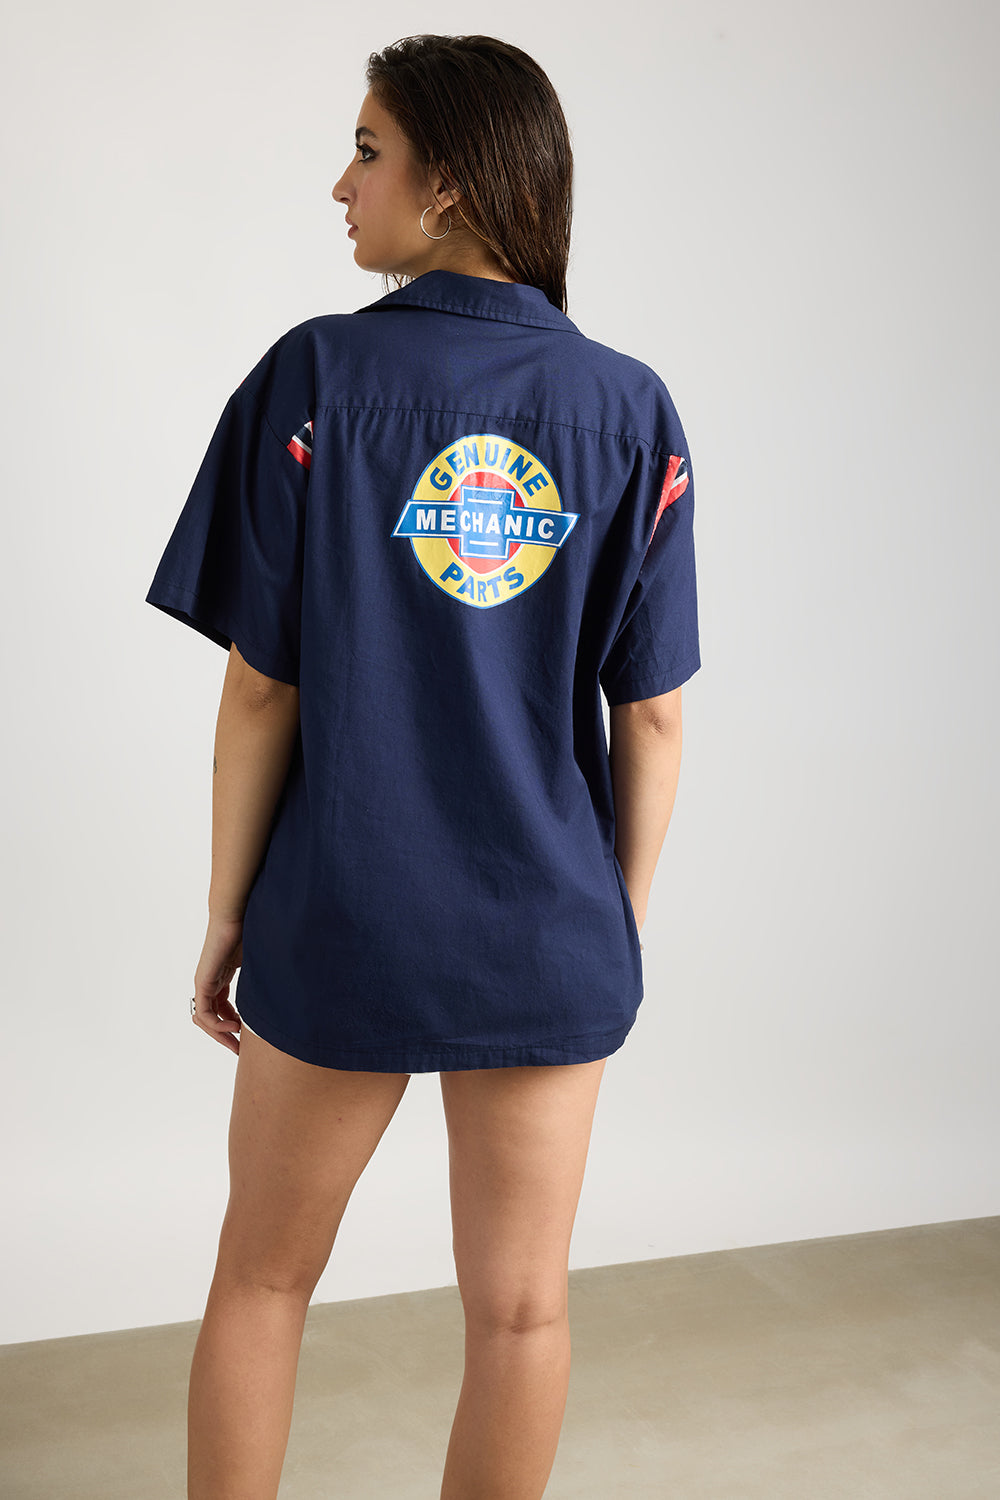 Cotton Poplin Women's Garage Shirt - Navy Blue